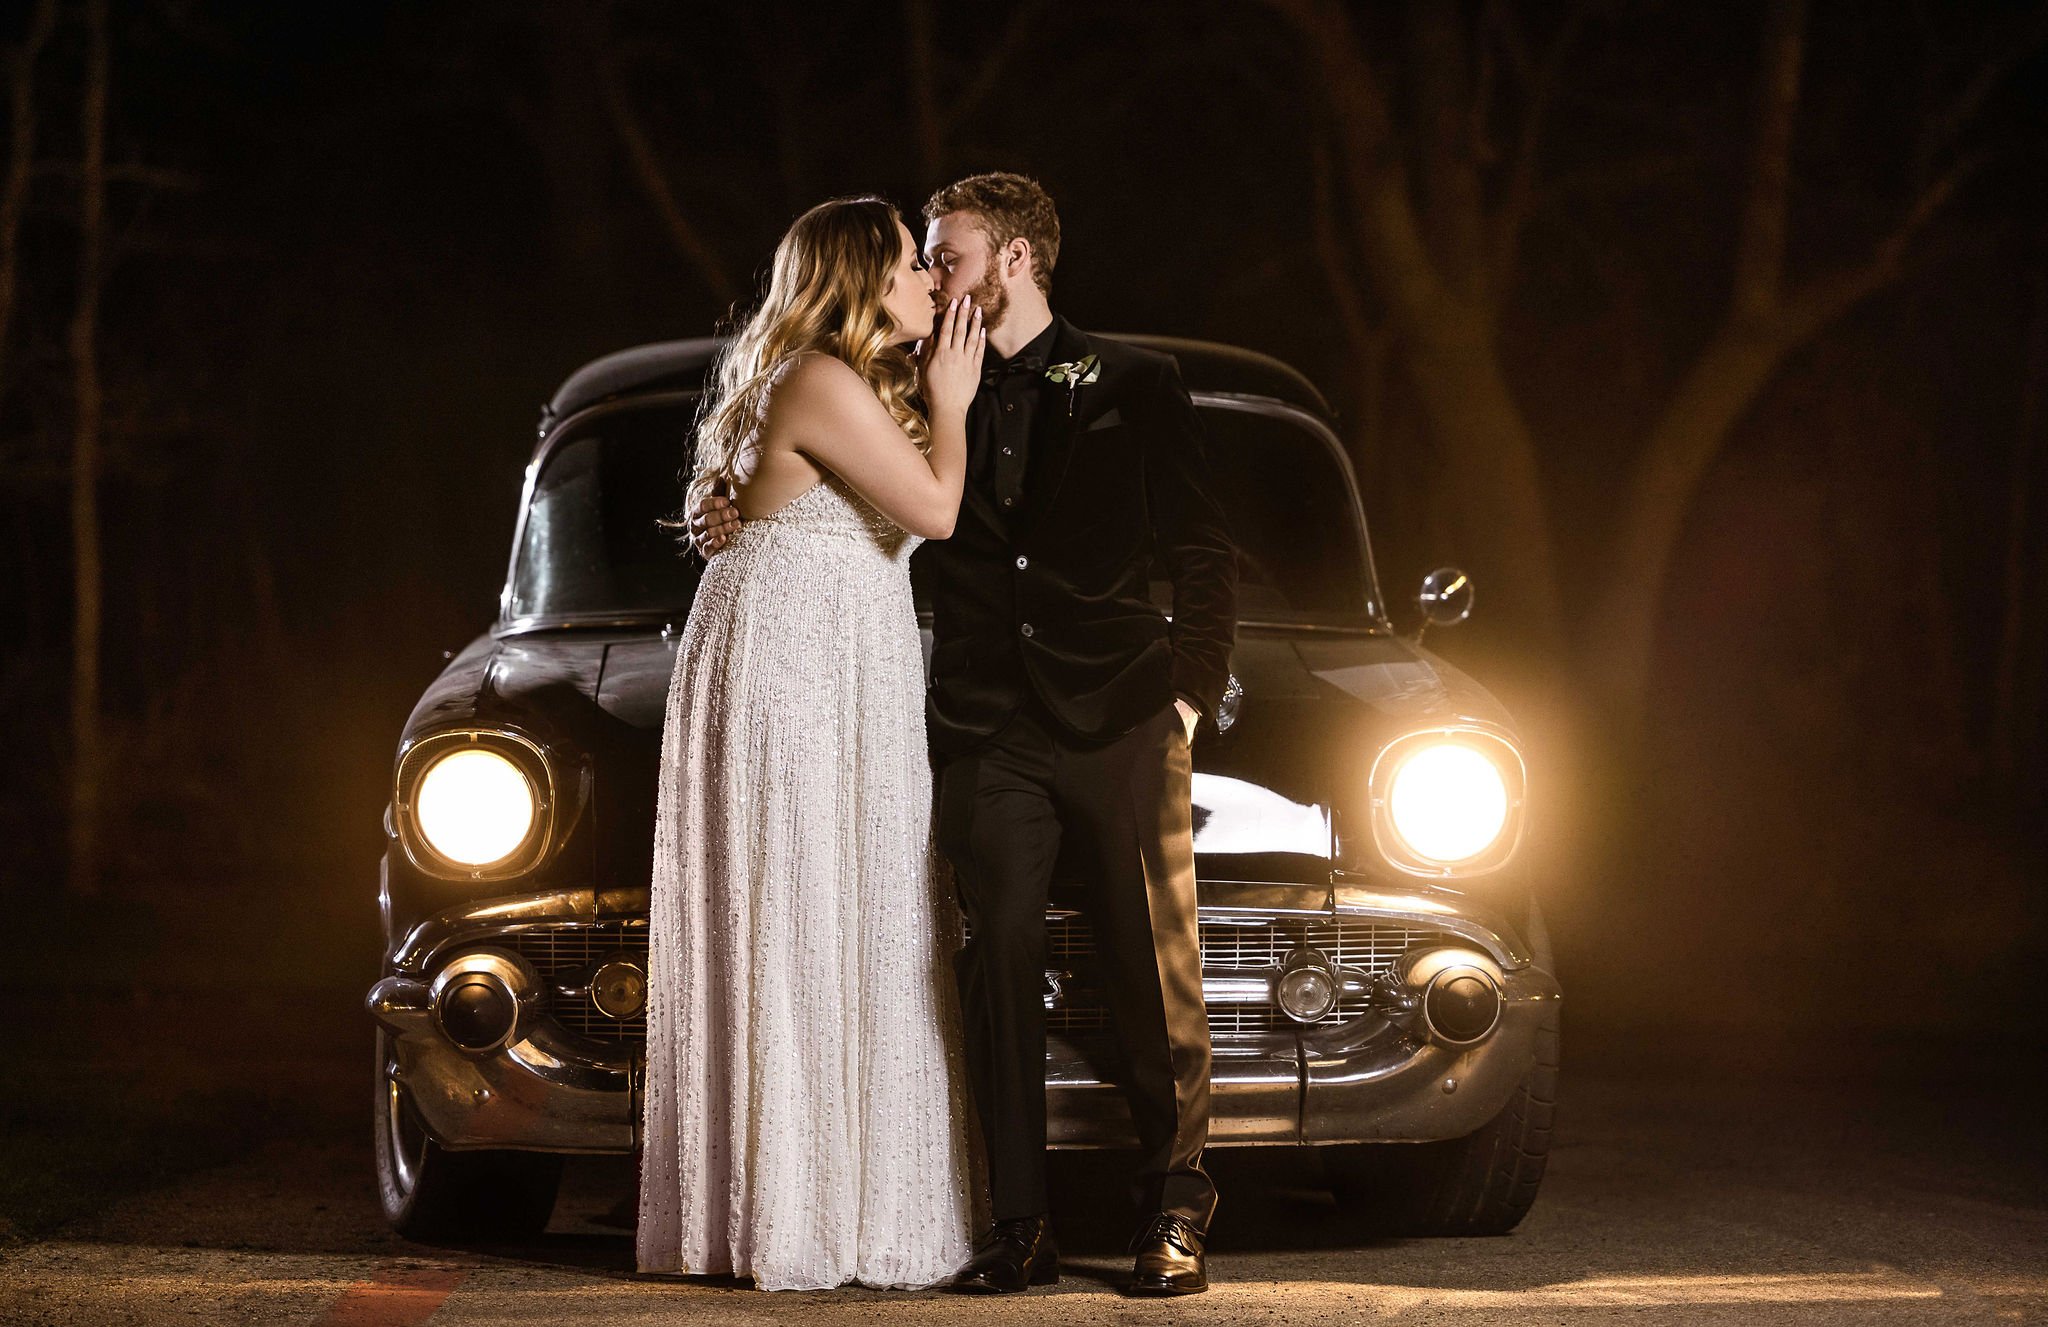 Fort Worth wedding photographer - carshot - epic wedding photography.jpg